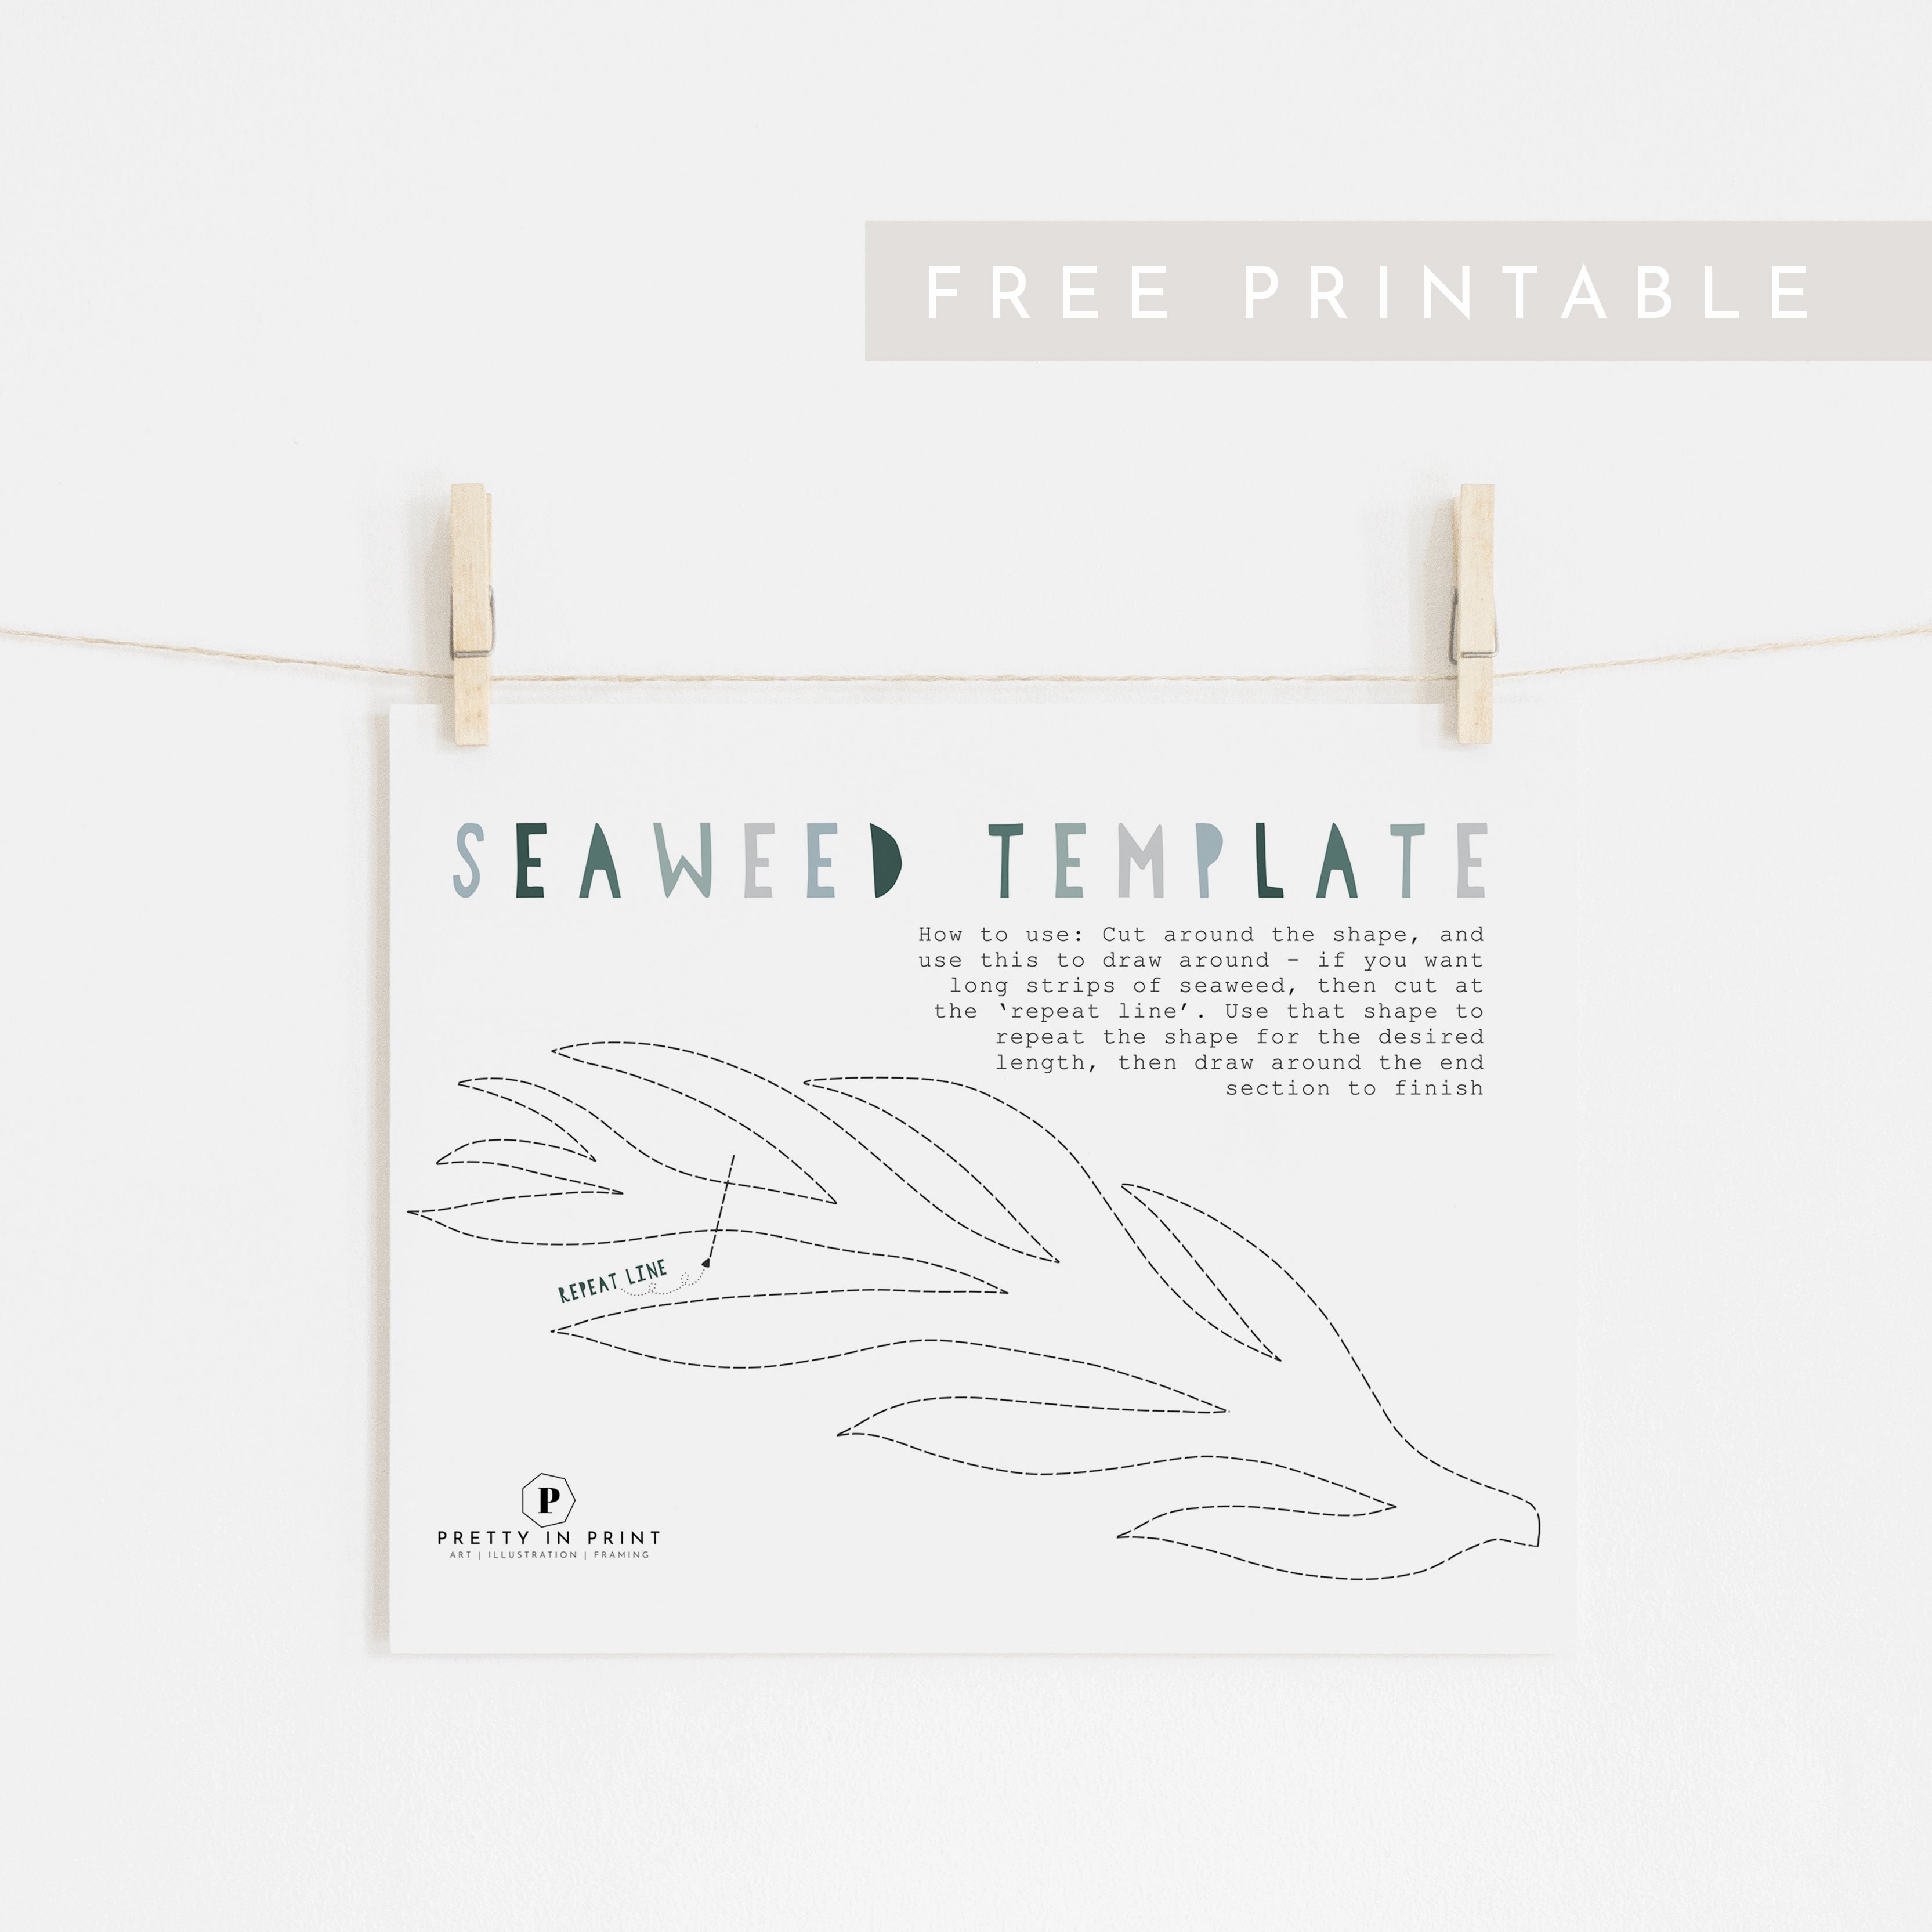 seaweed-template-1-free-printable-pretty-in-print-art-ltd